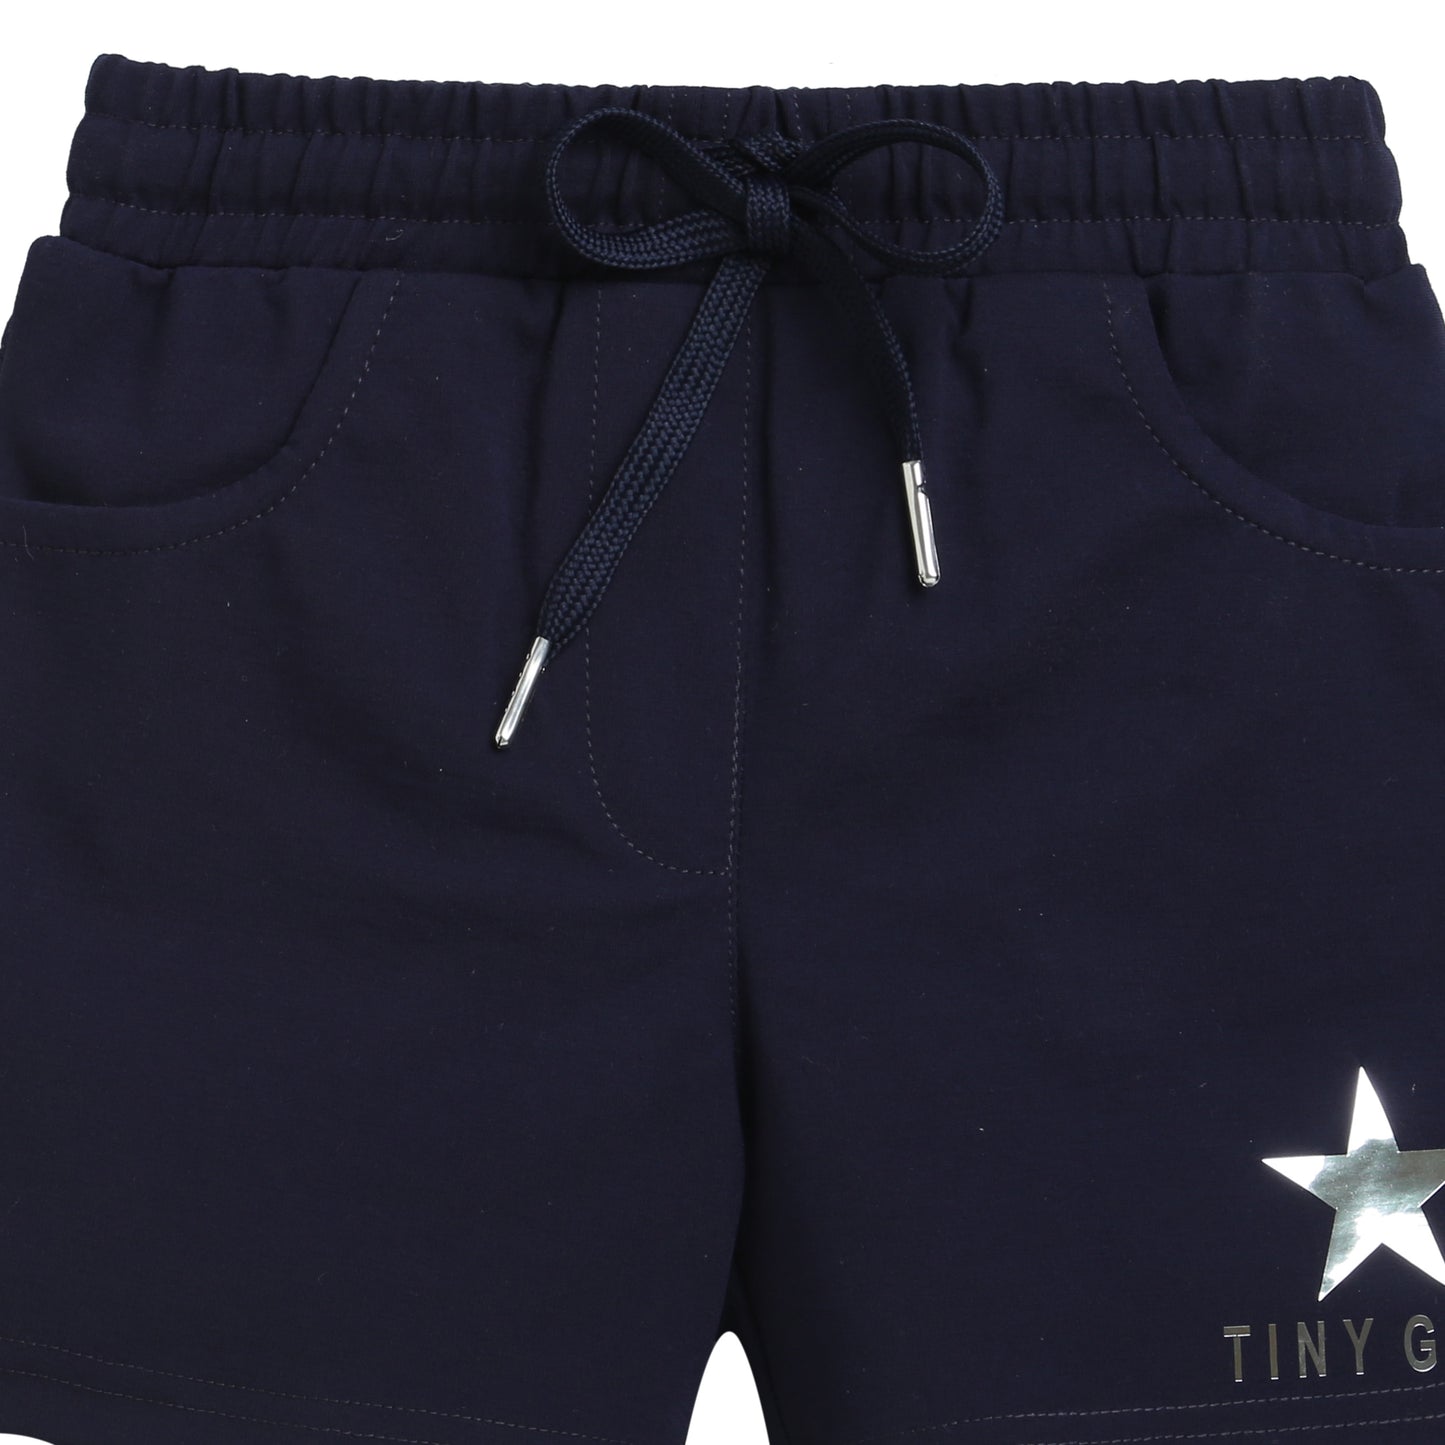 Basic Navy Blue  Tiny Girl Shorts